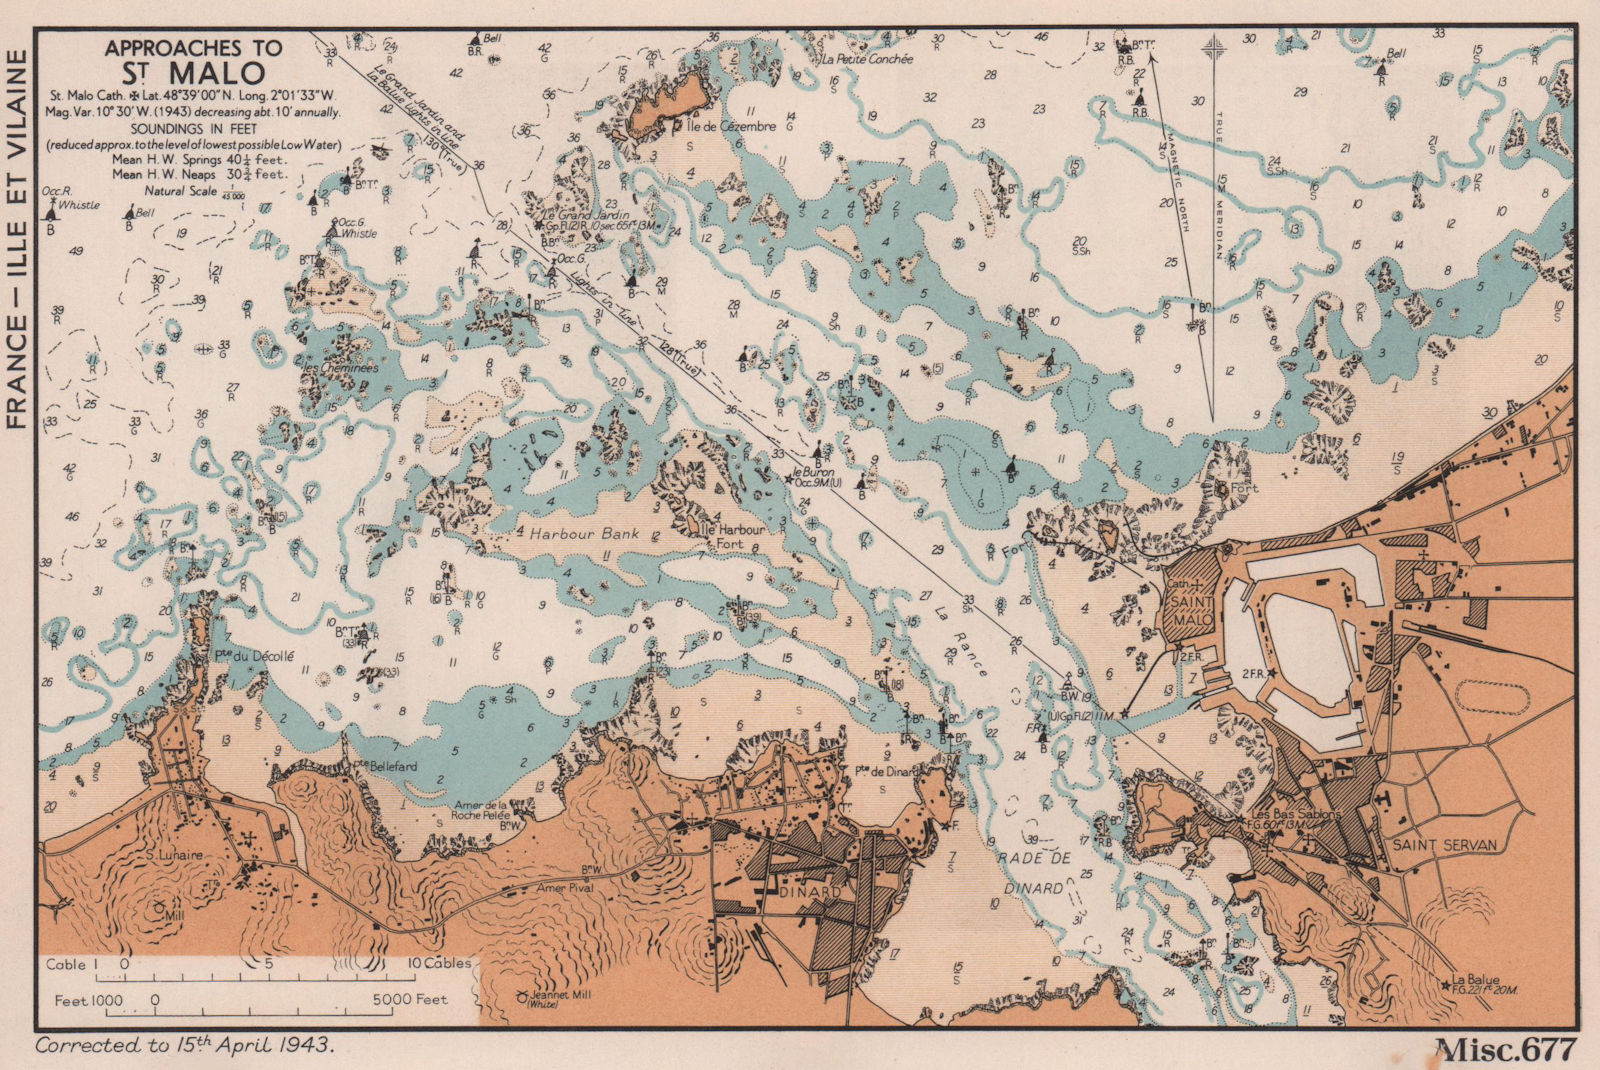 St Malo/Servan Dinard approaches coast chart. D-Day planning map. ADMIRALTY 1943